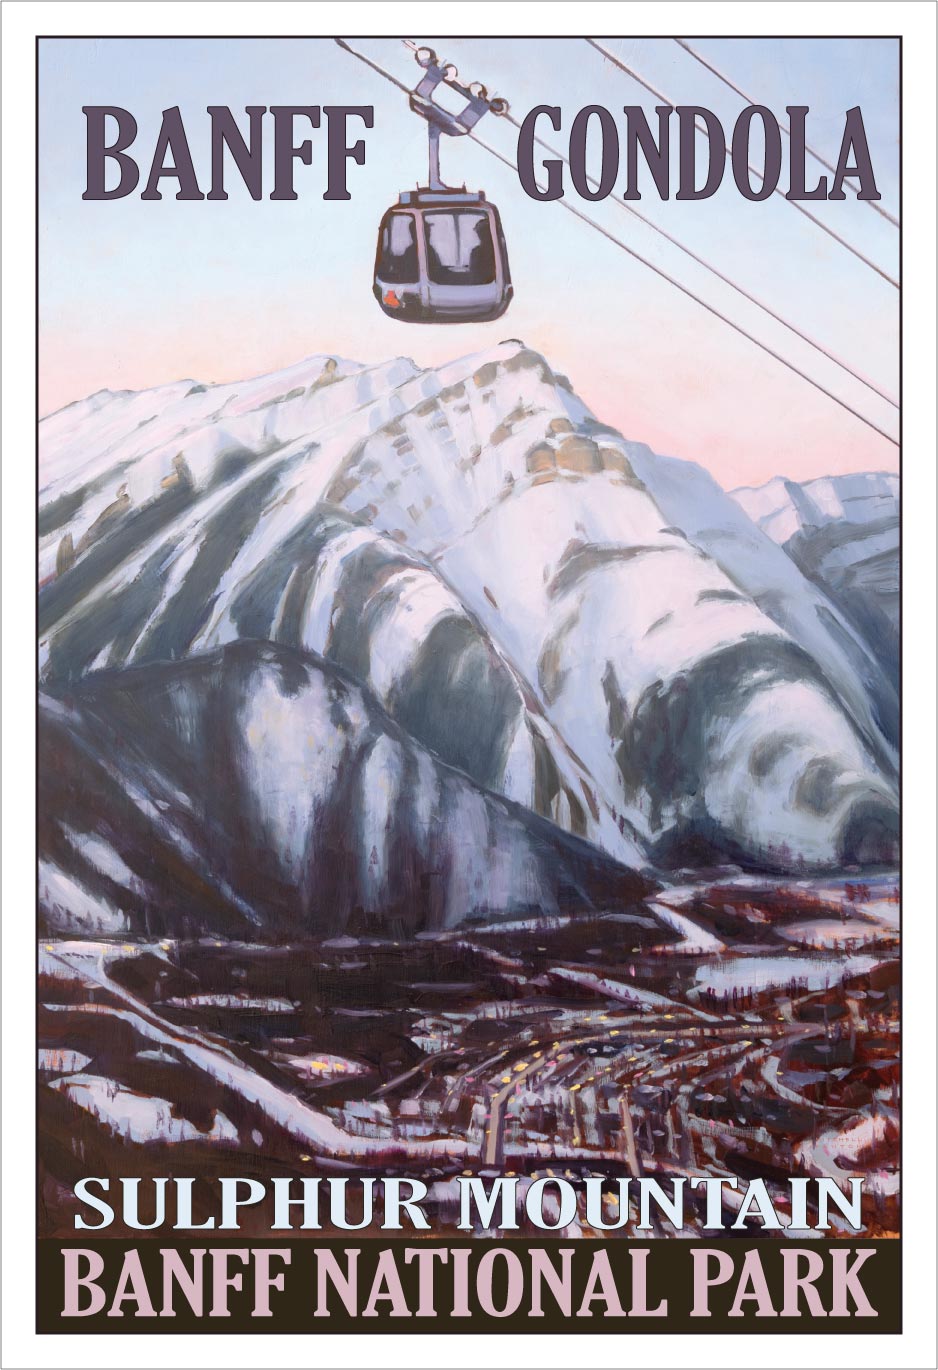 Banff Gondola - Sulphur Mountain